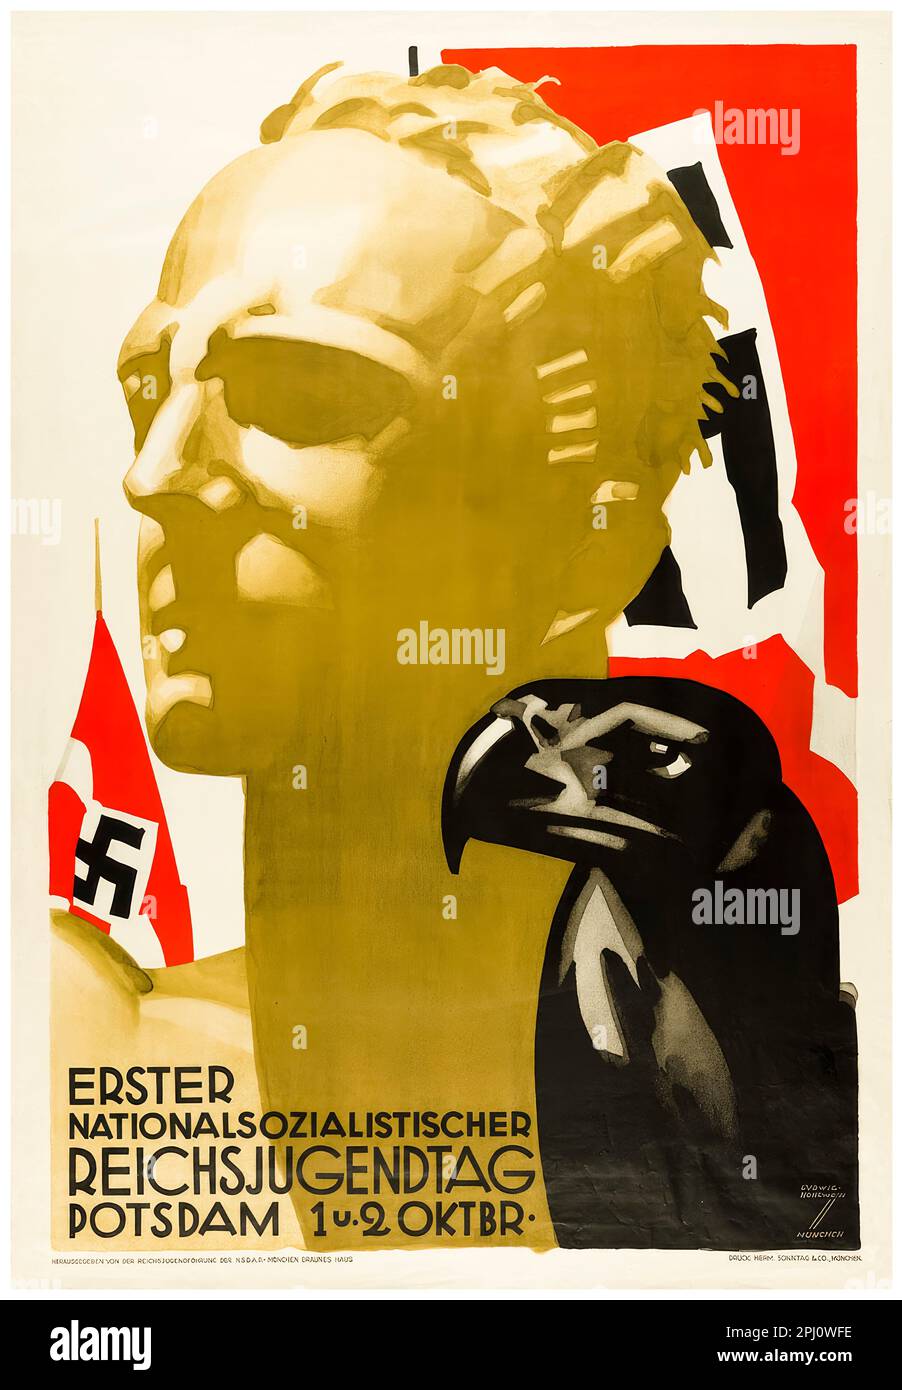 Erster Nationalsozialistischer Jugendtag (Hitlerjugend), Potsdam, 1932. Oktober, Nazi-Event-Poster von Ludwig Hohlwein, 1932 Stockfoto